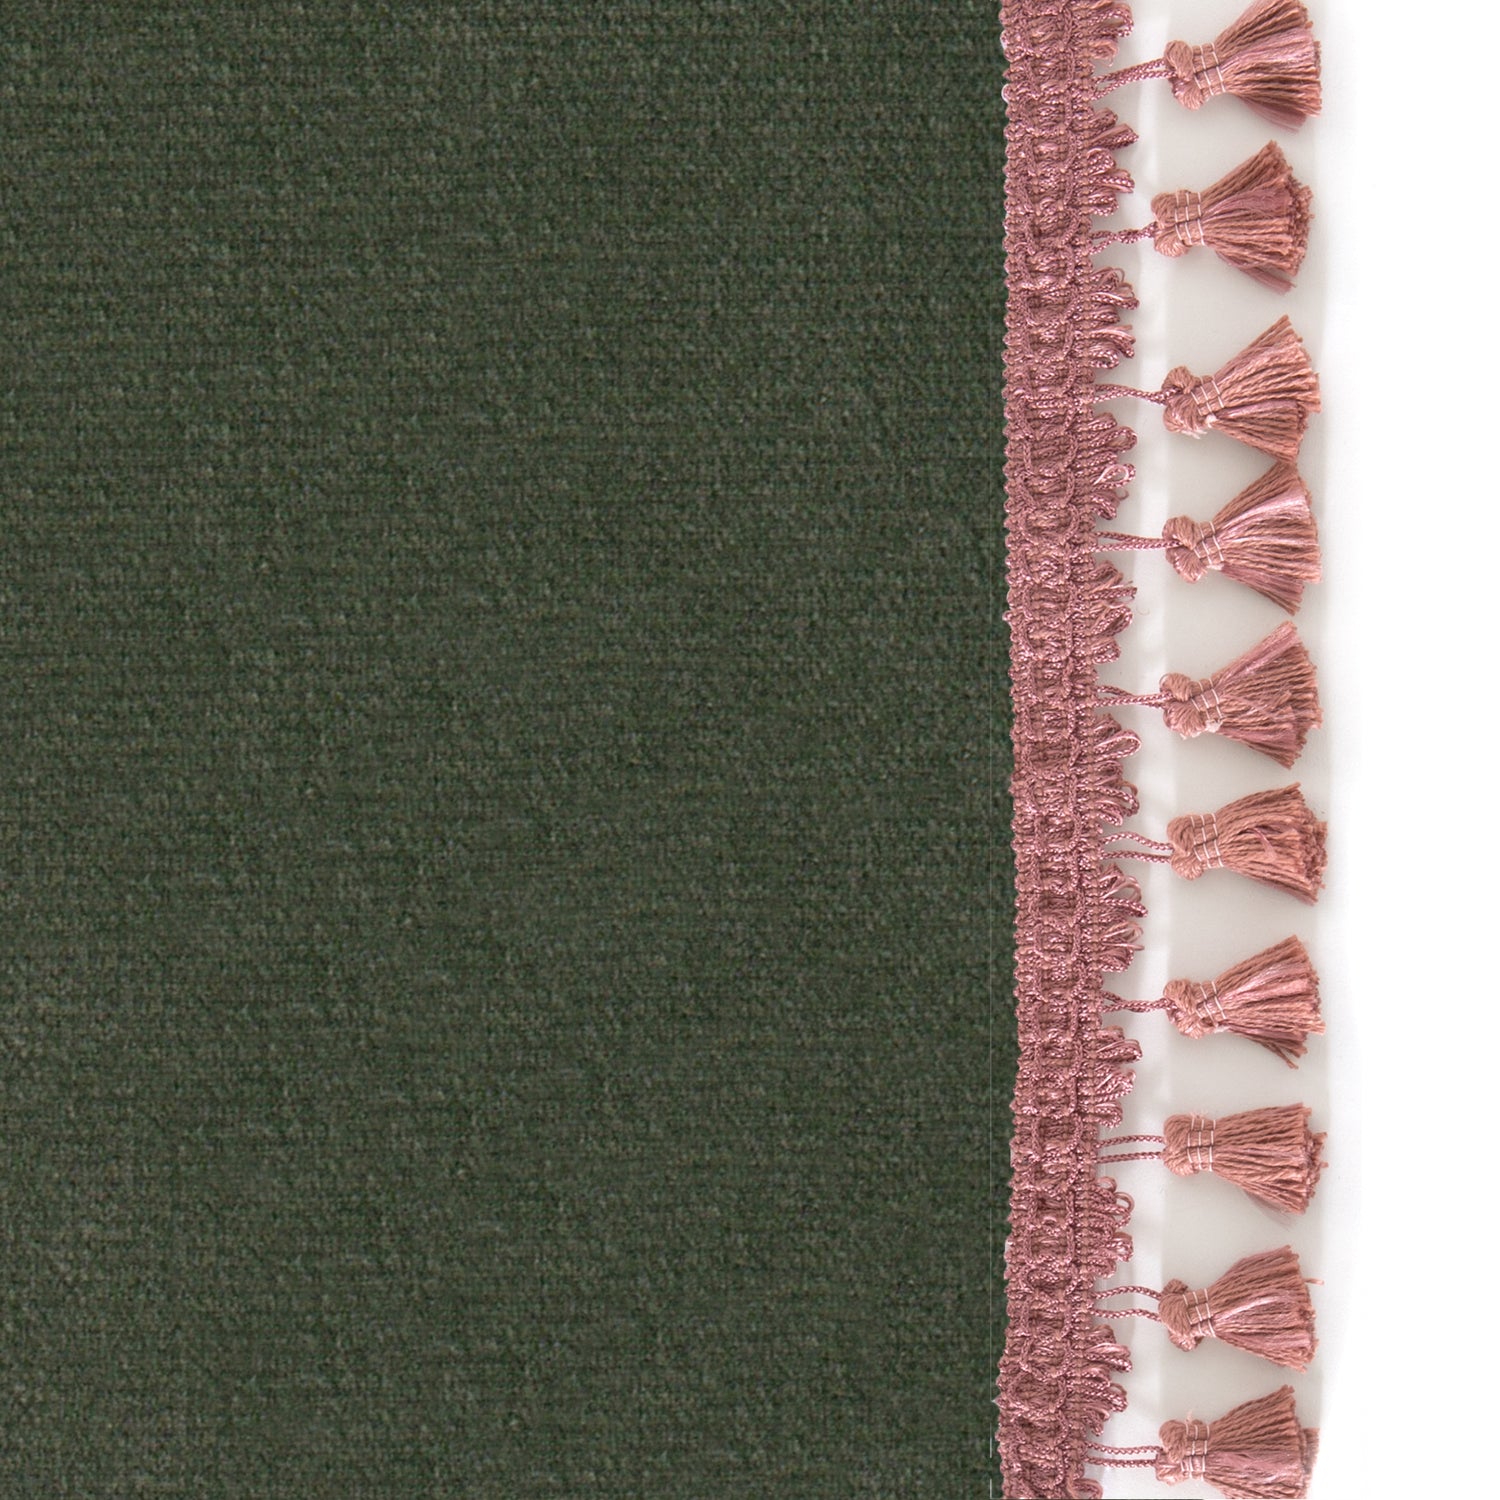 Upclose picture of Fern Velvet custom Fern Greencurtain with dusty rose tassel trim